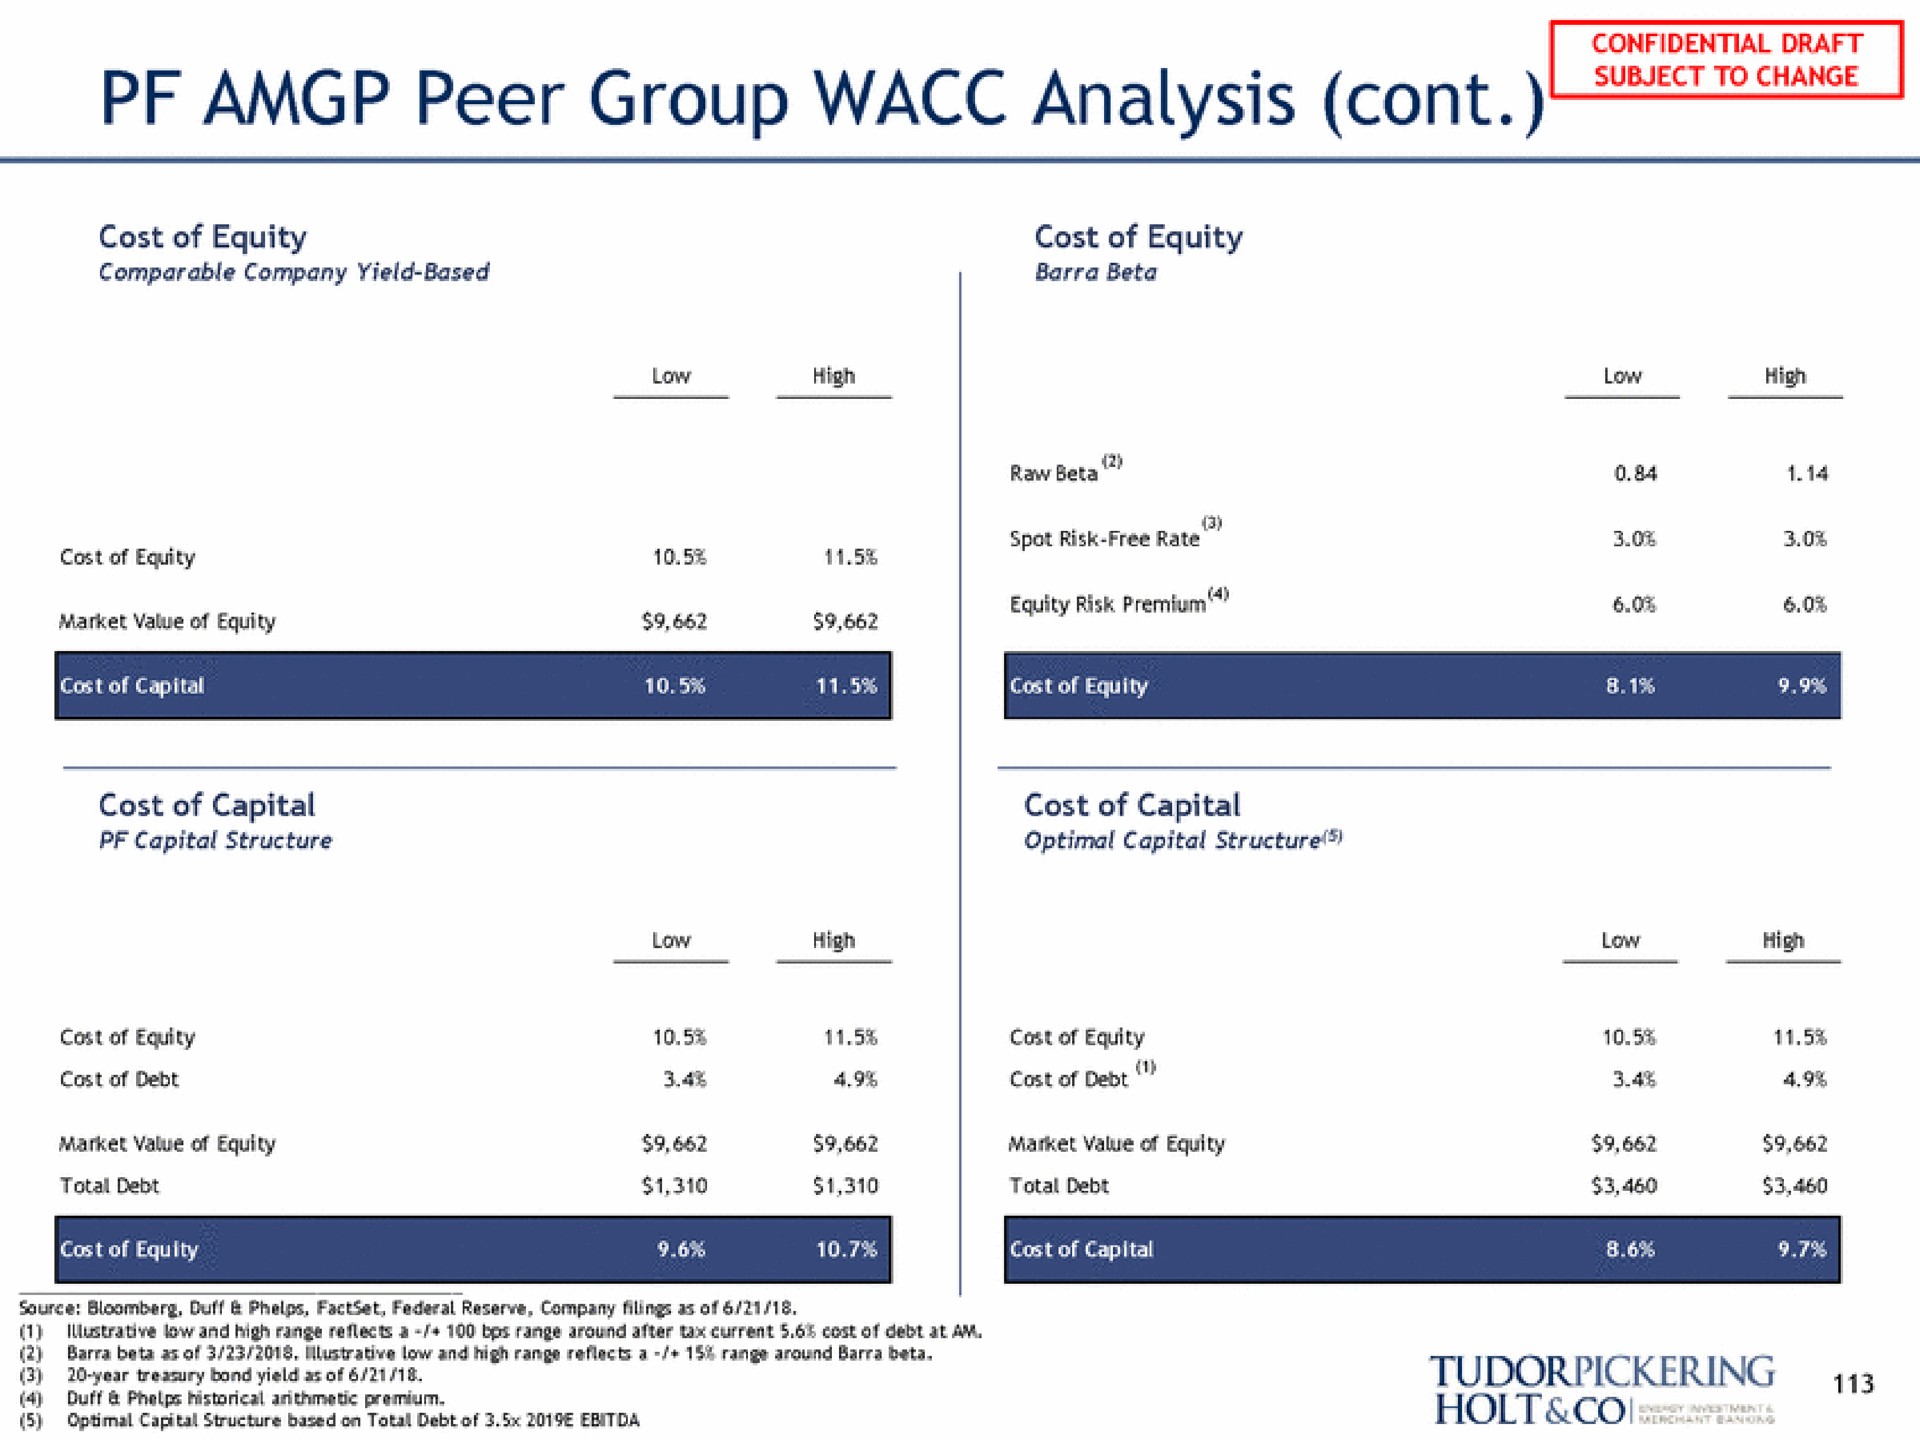 peer group analysis aes | Tudor, Pickering, Holt & Co